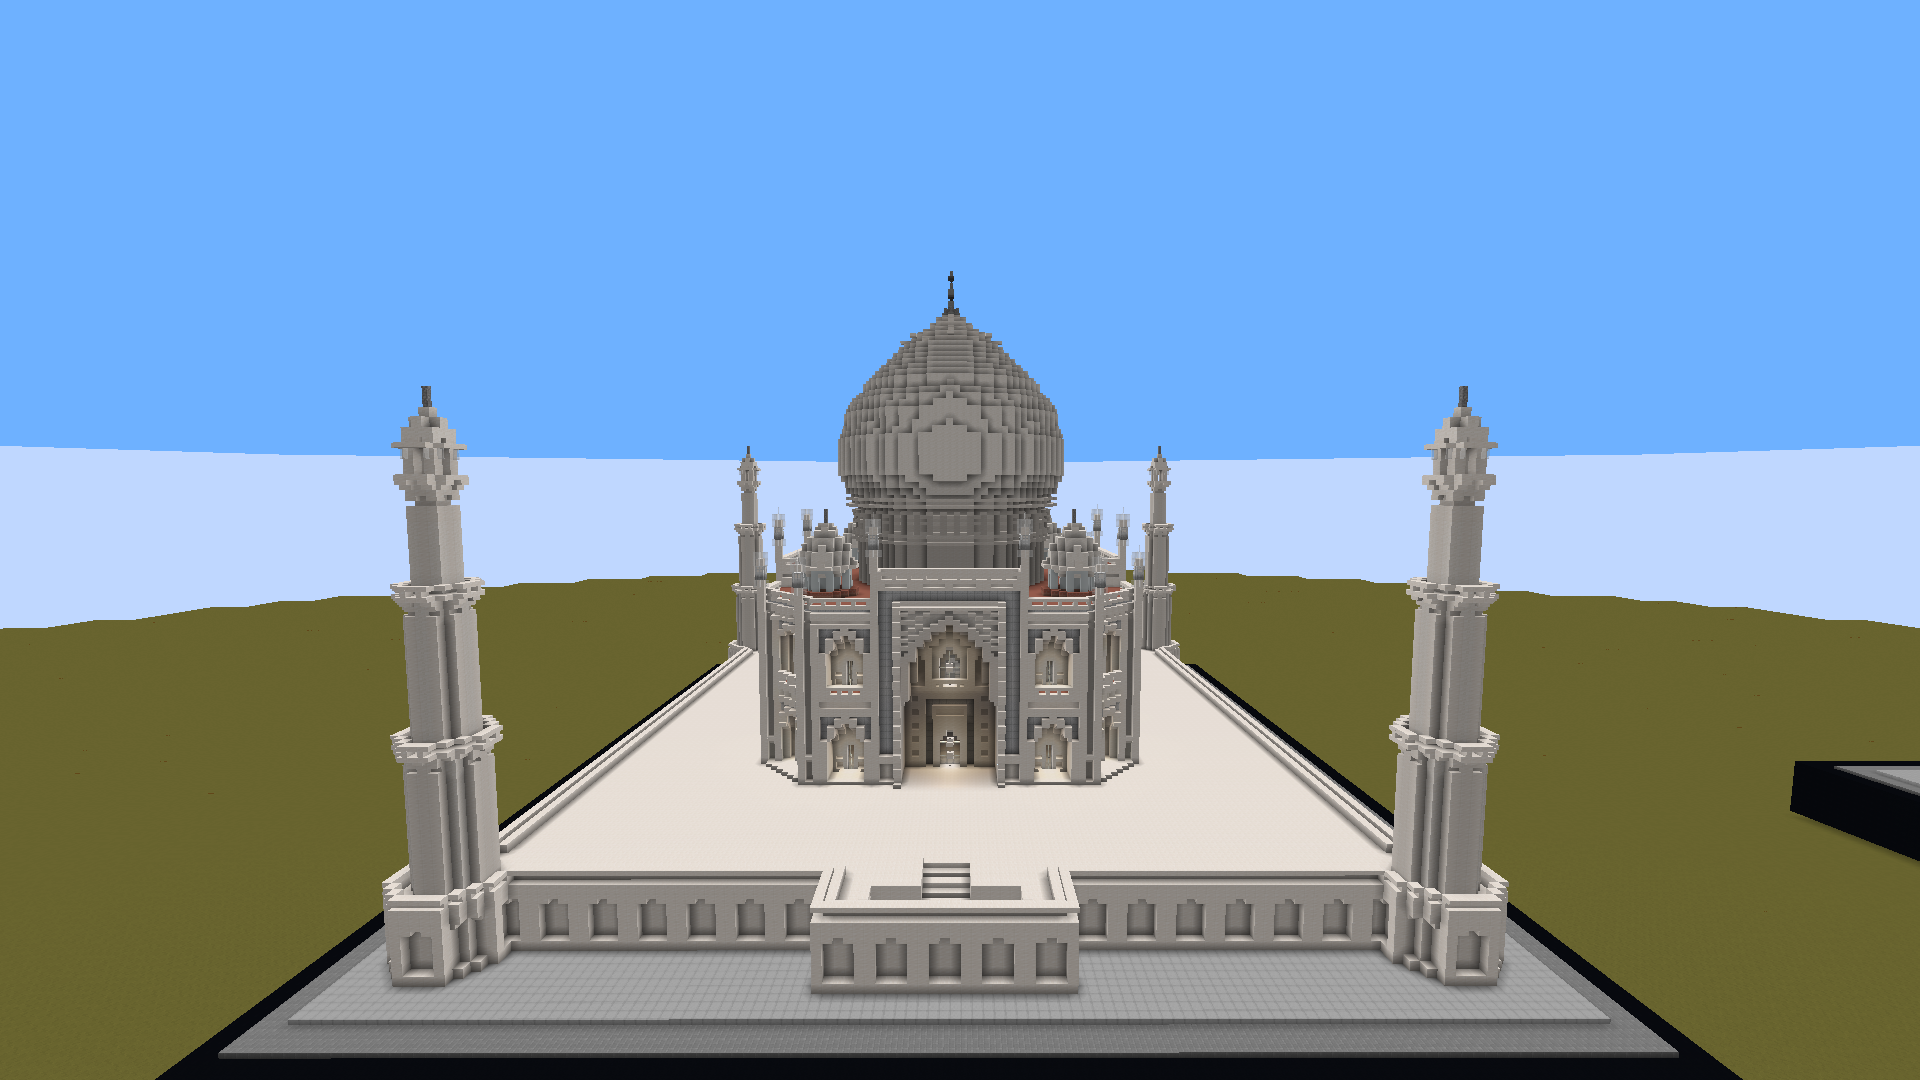 Minecract Taj Mahal schematic (litematic)